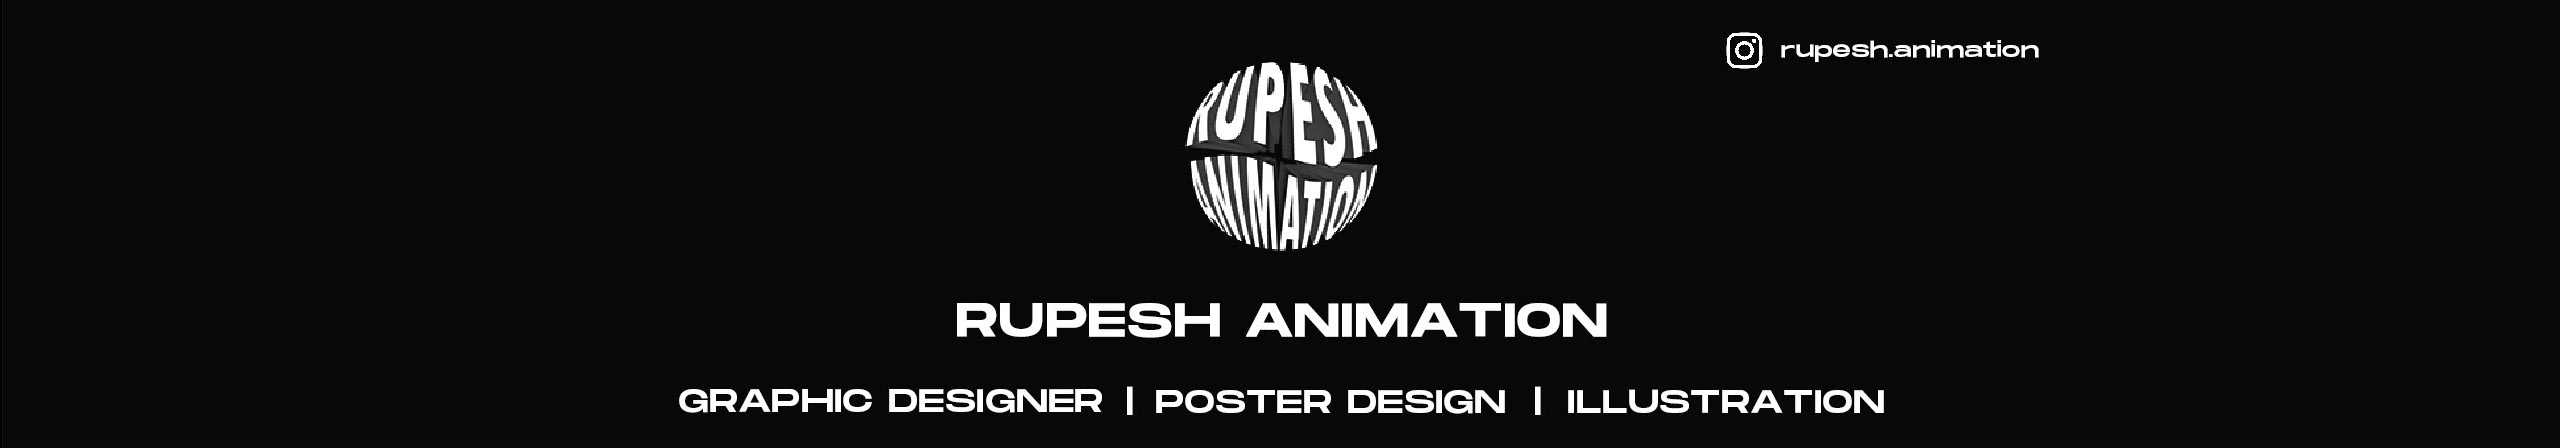 Rupesh animation's profile banner